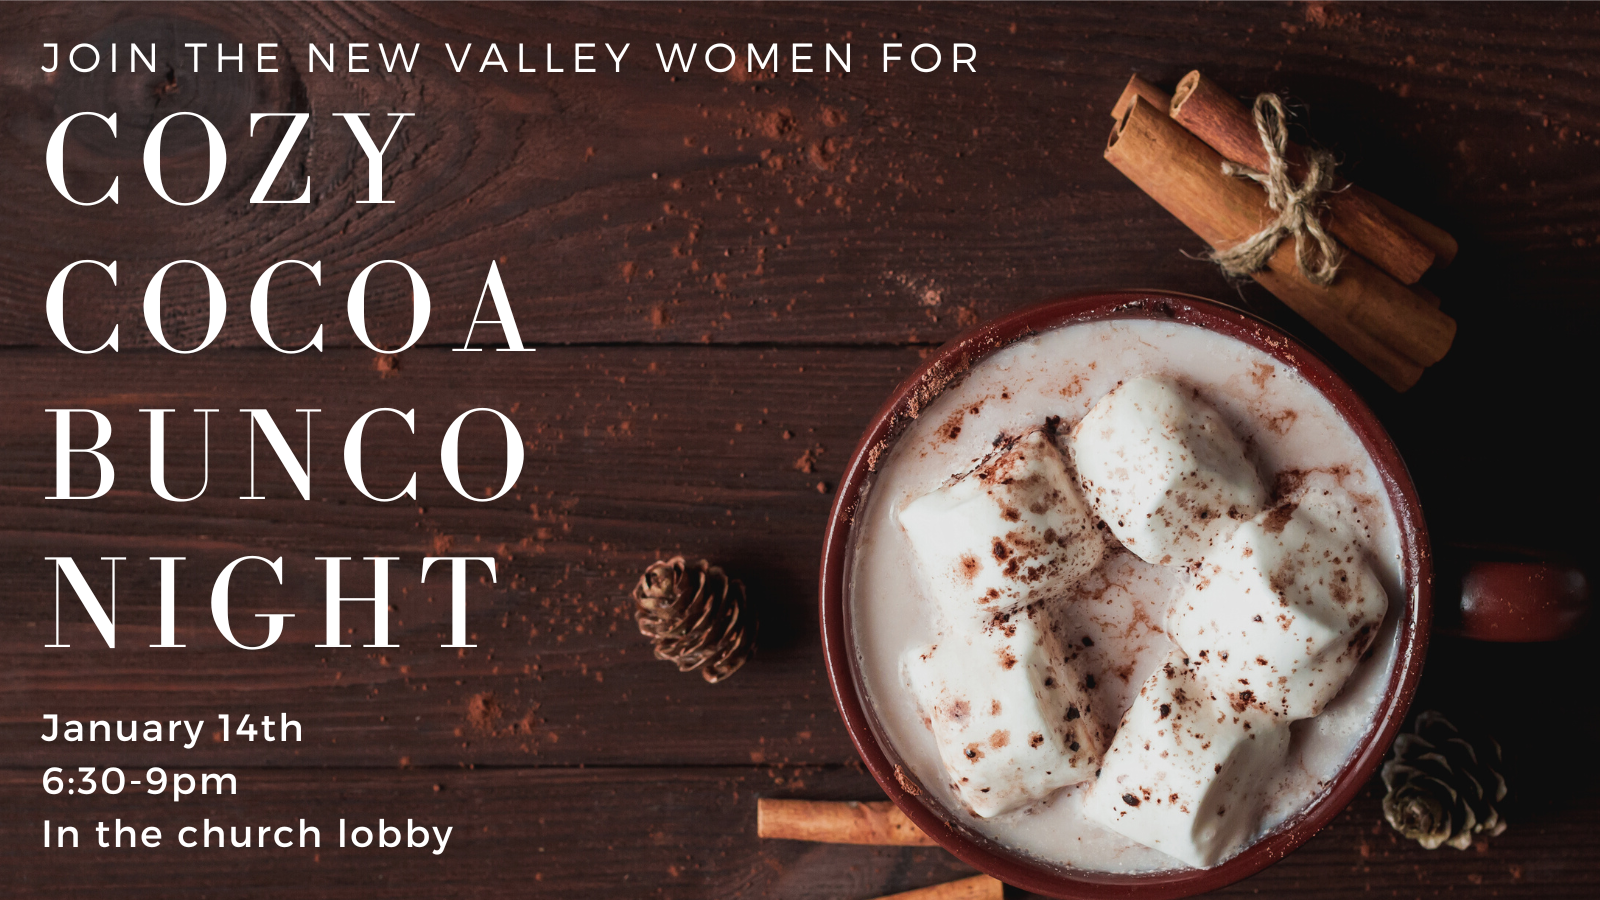 Cozy Cocoa Bunco Night (1600 × 900 px) image